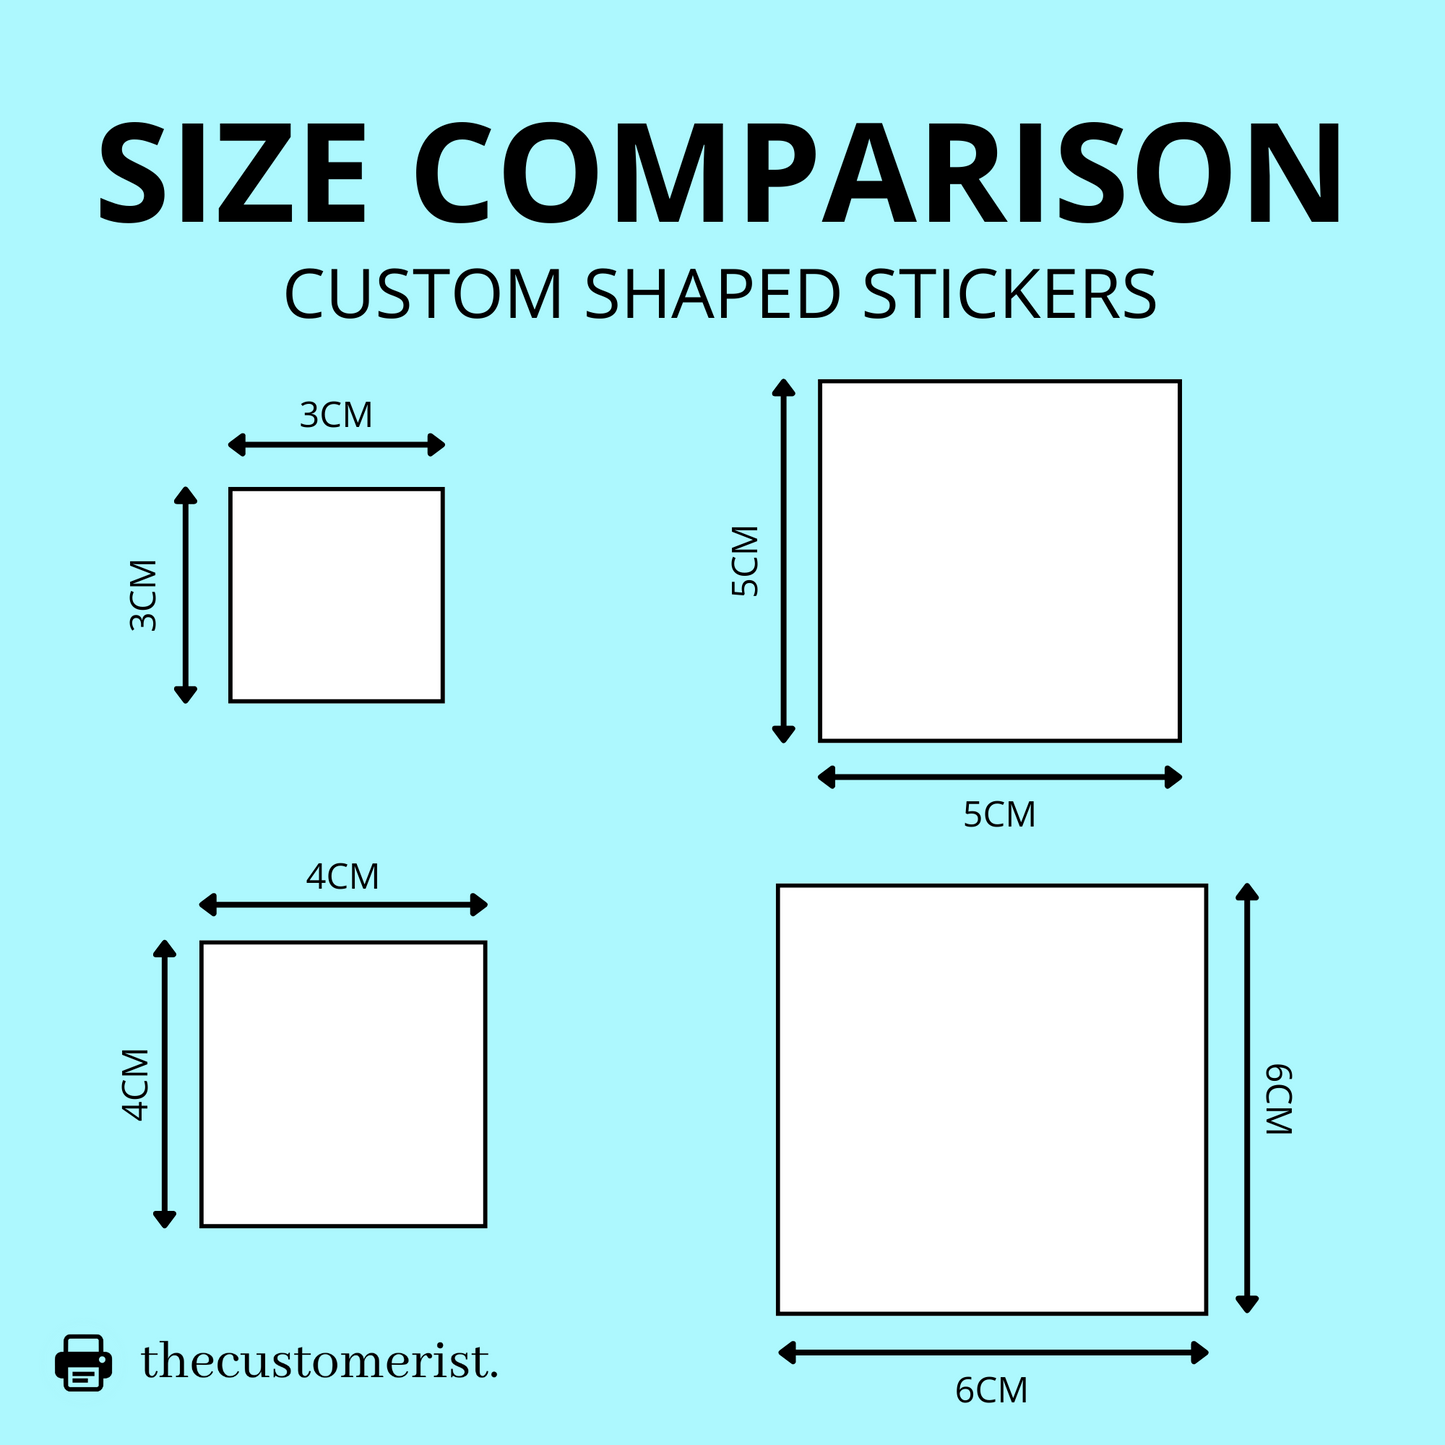 Custom Shaped Stickers